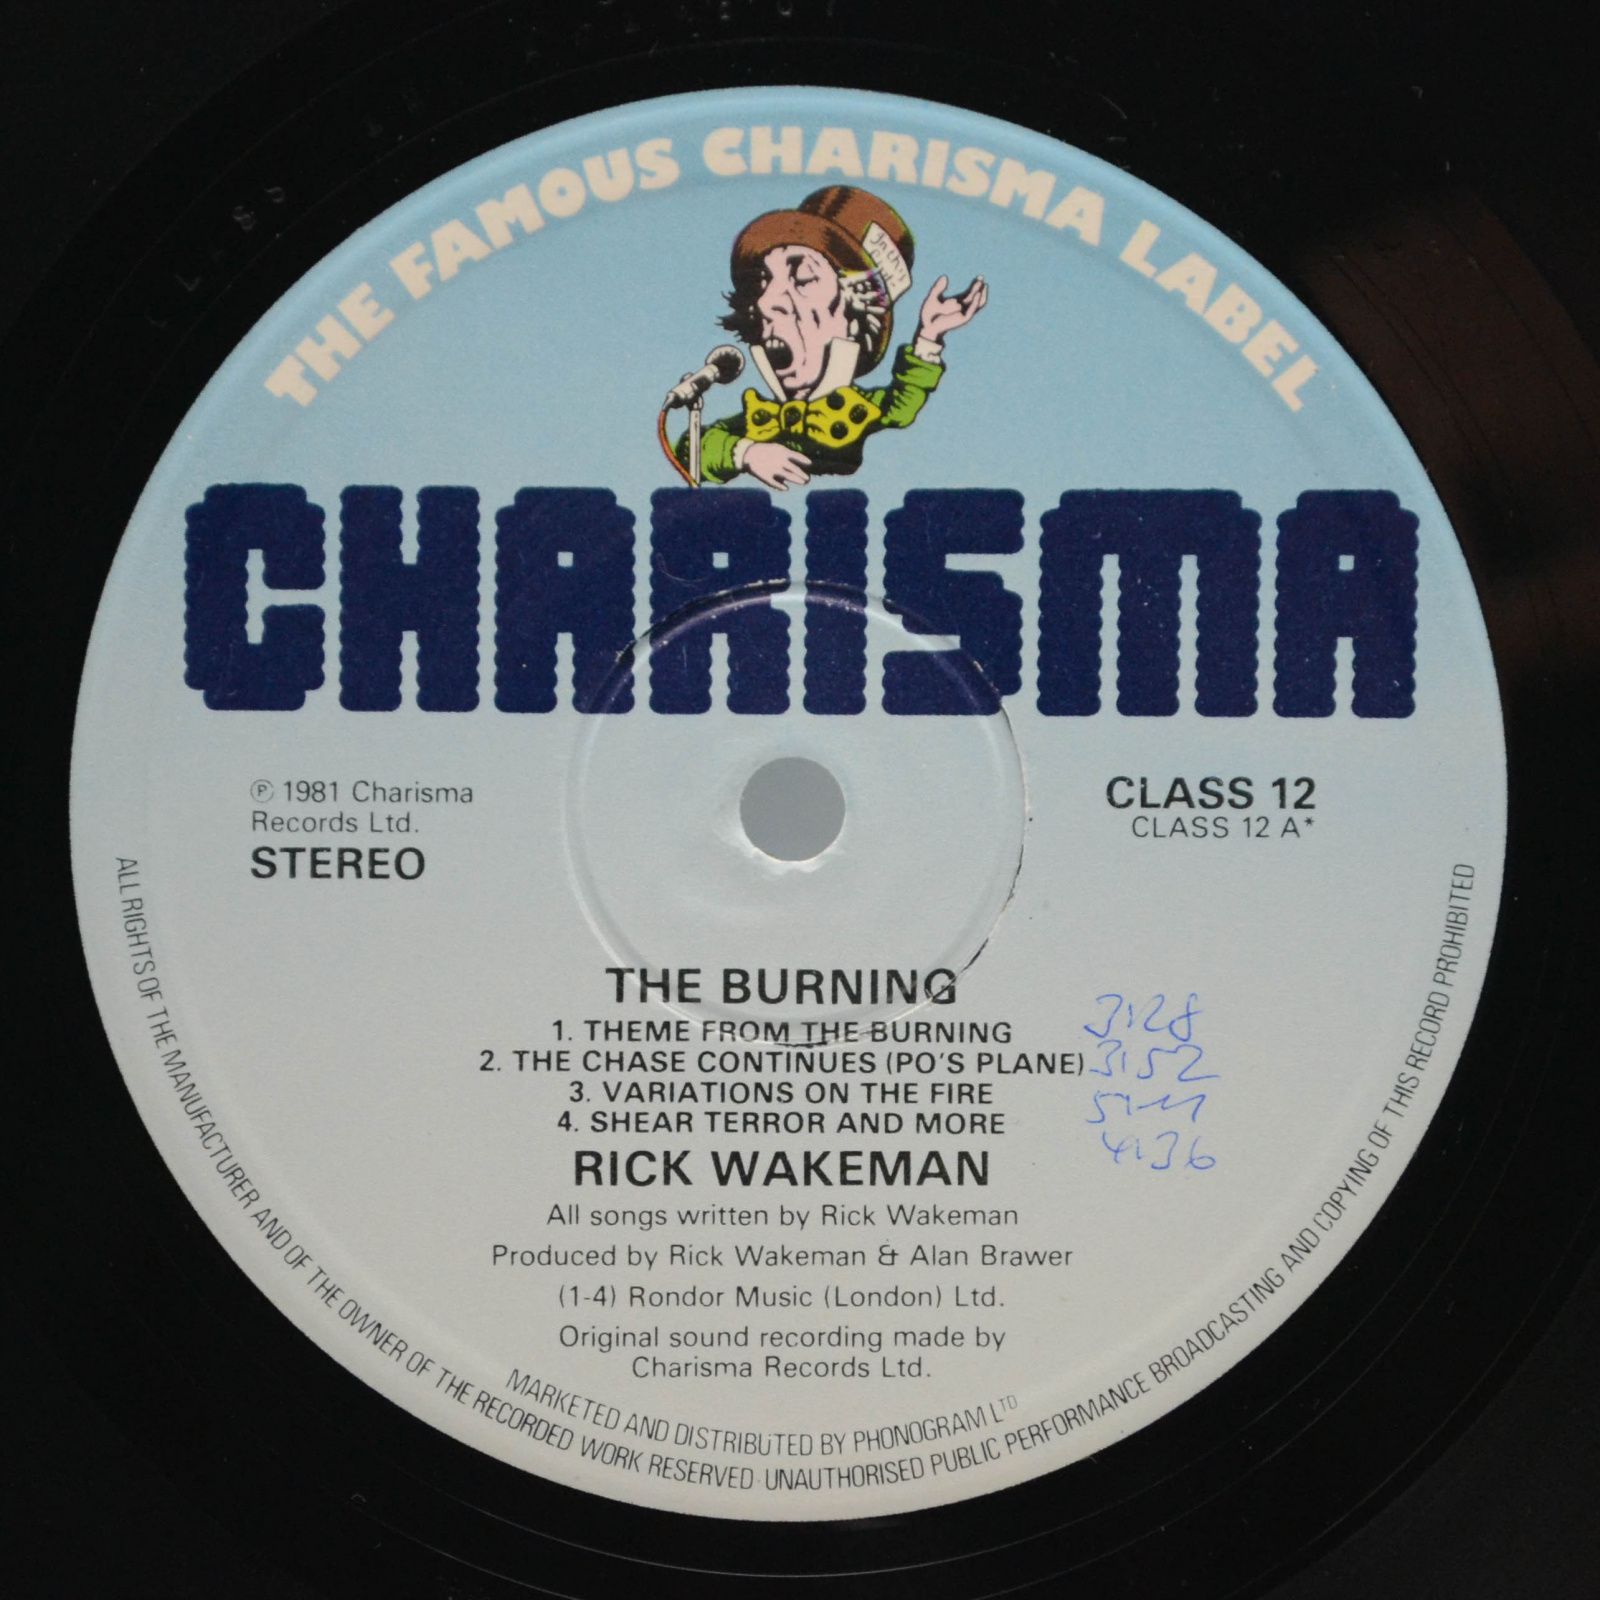 Rick Wakeman — The Burning (The Original Soundtrack Music From The Film) (1-st, UK), 1981